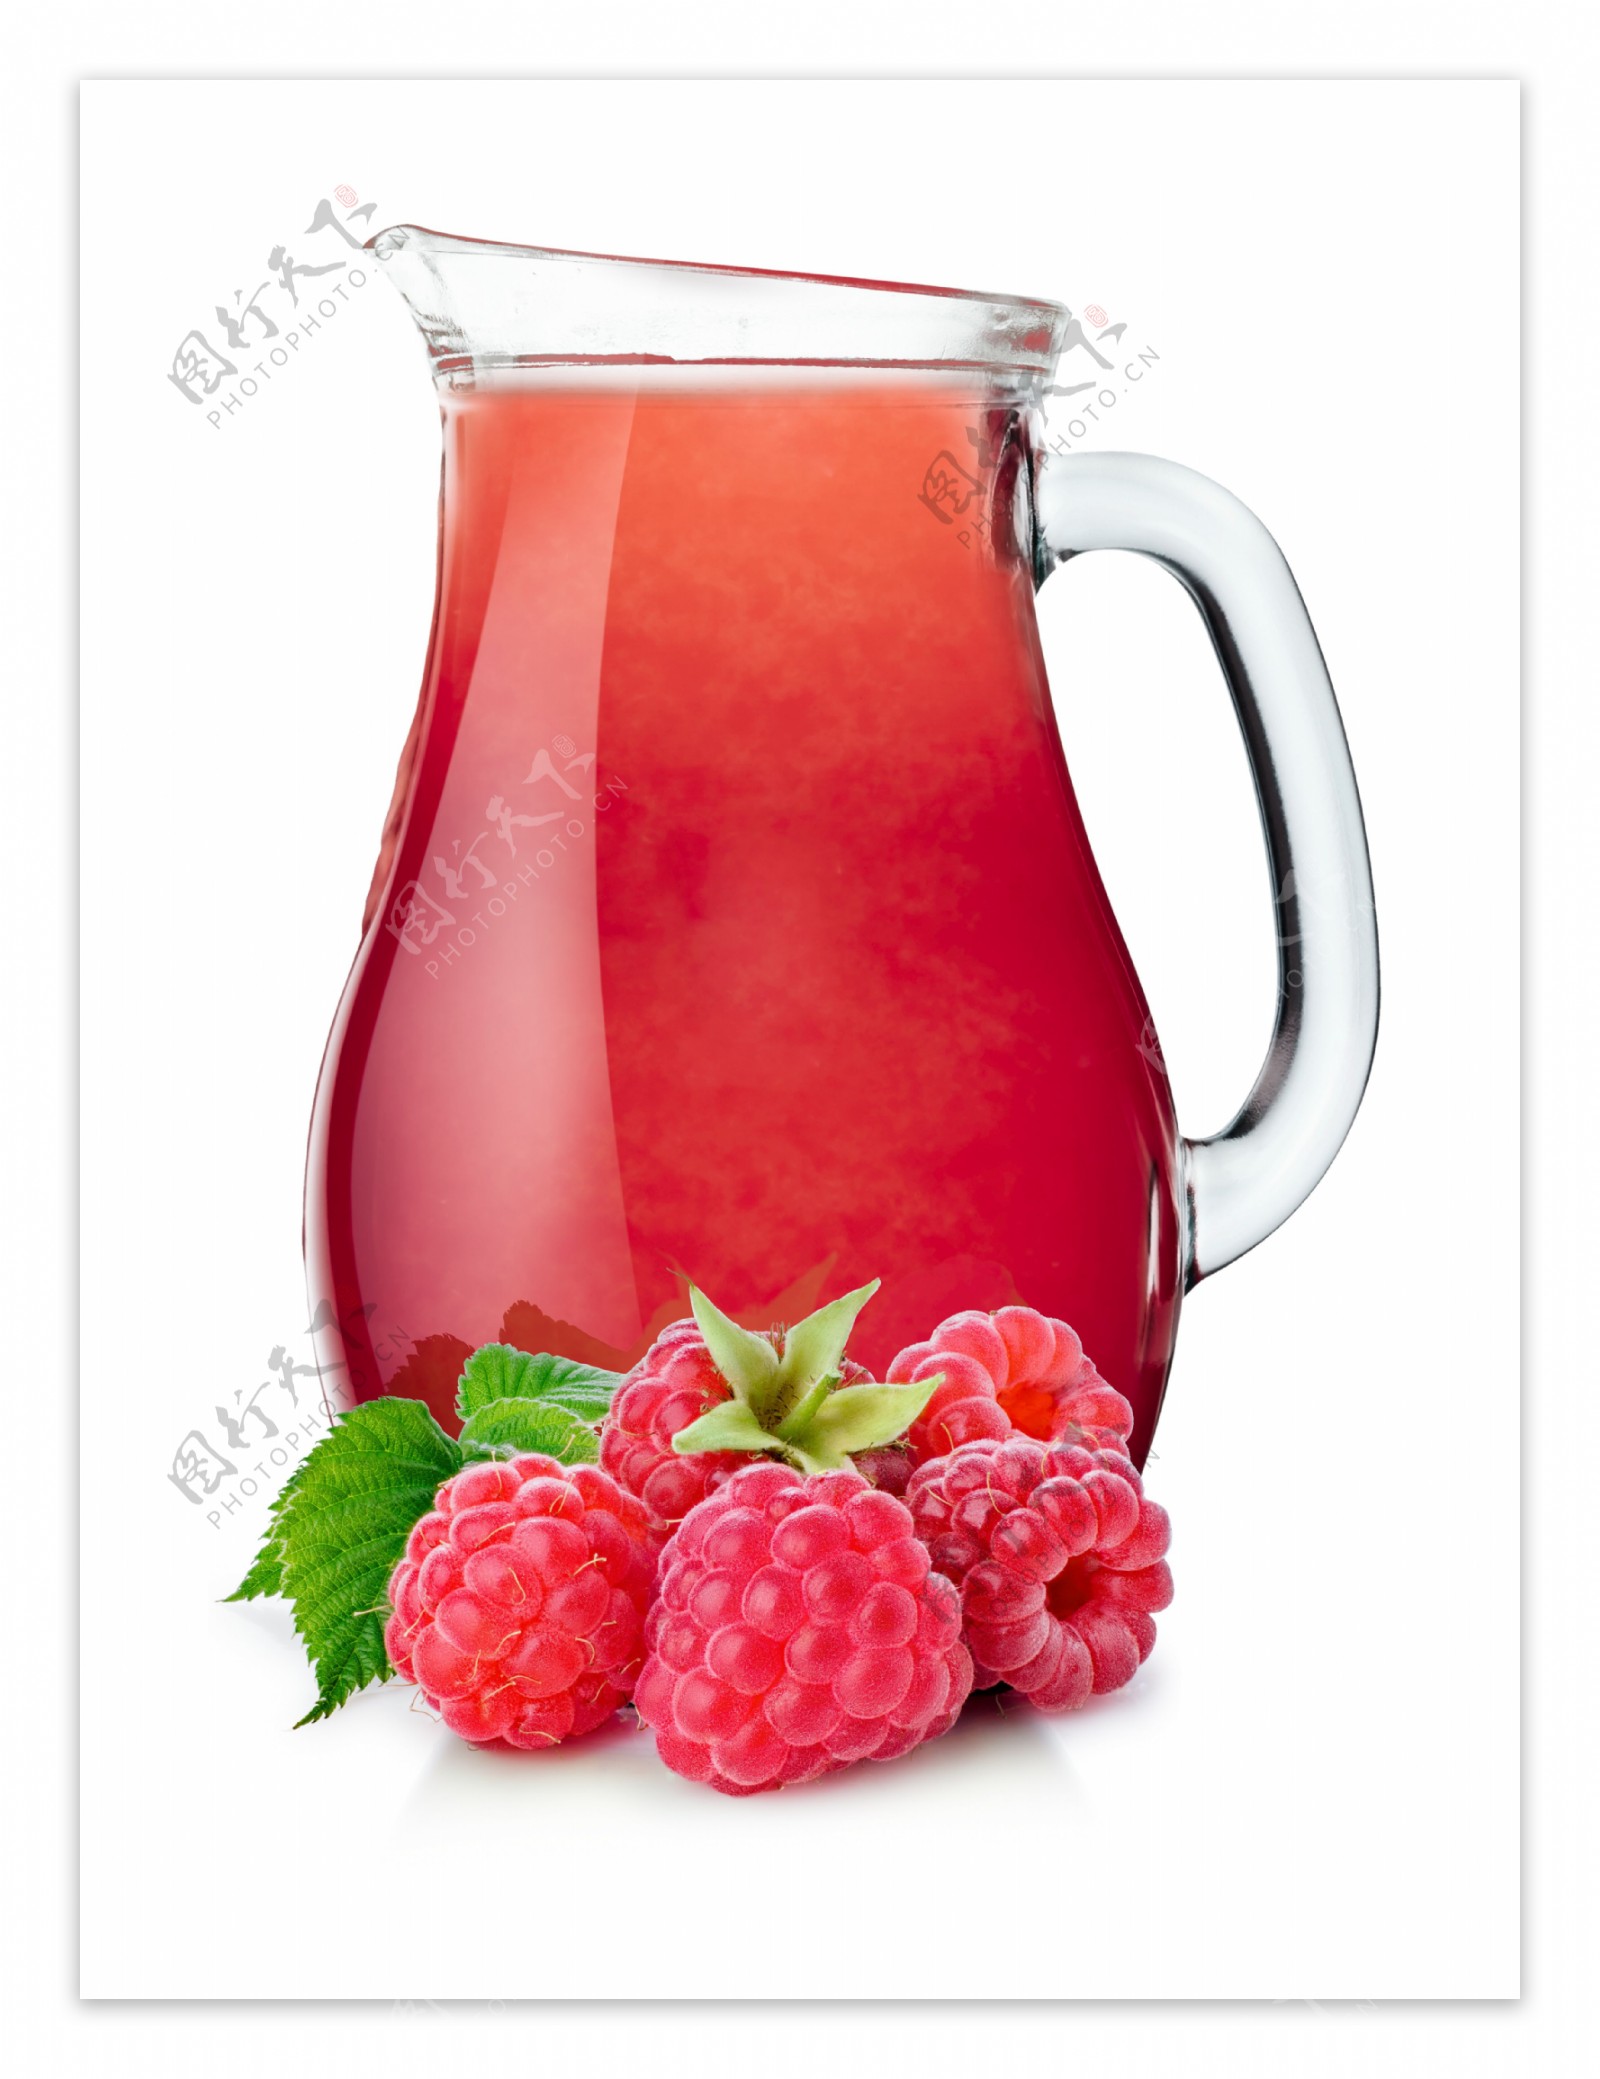 树莓汁